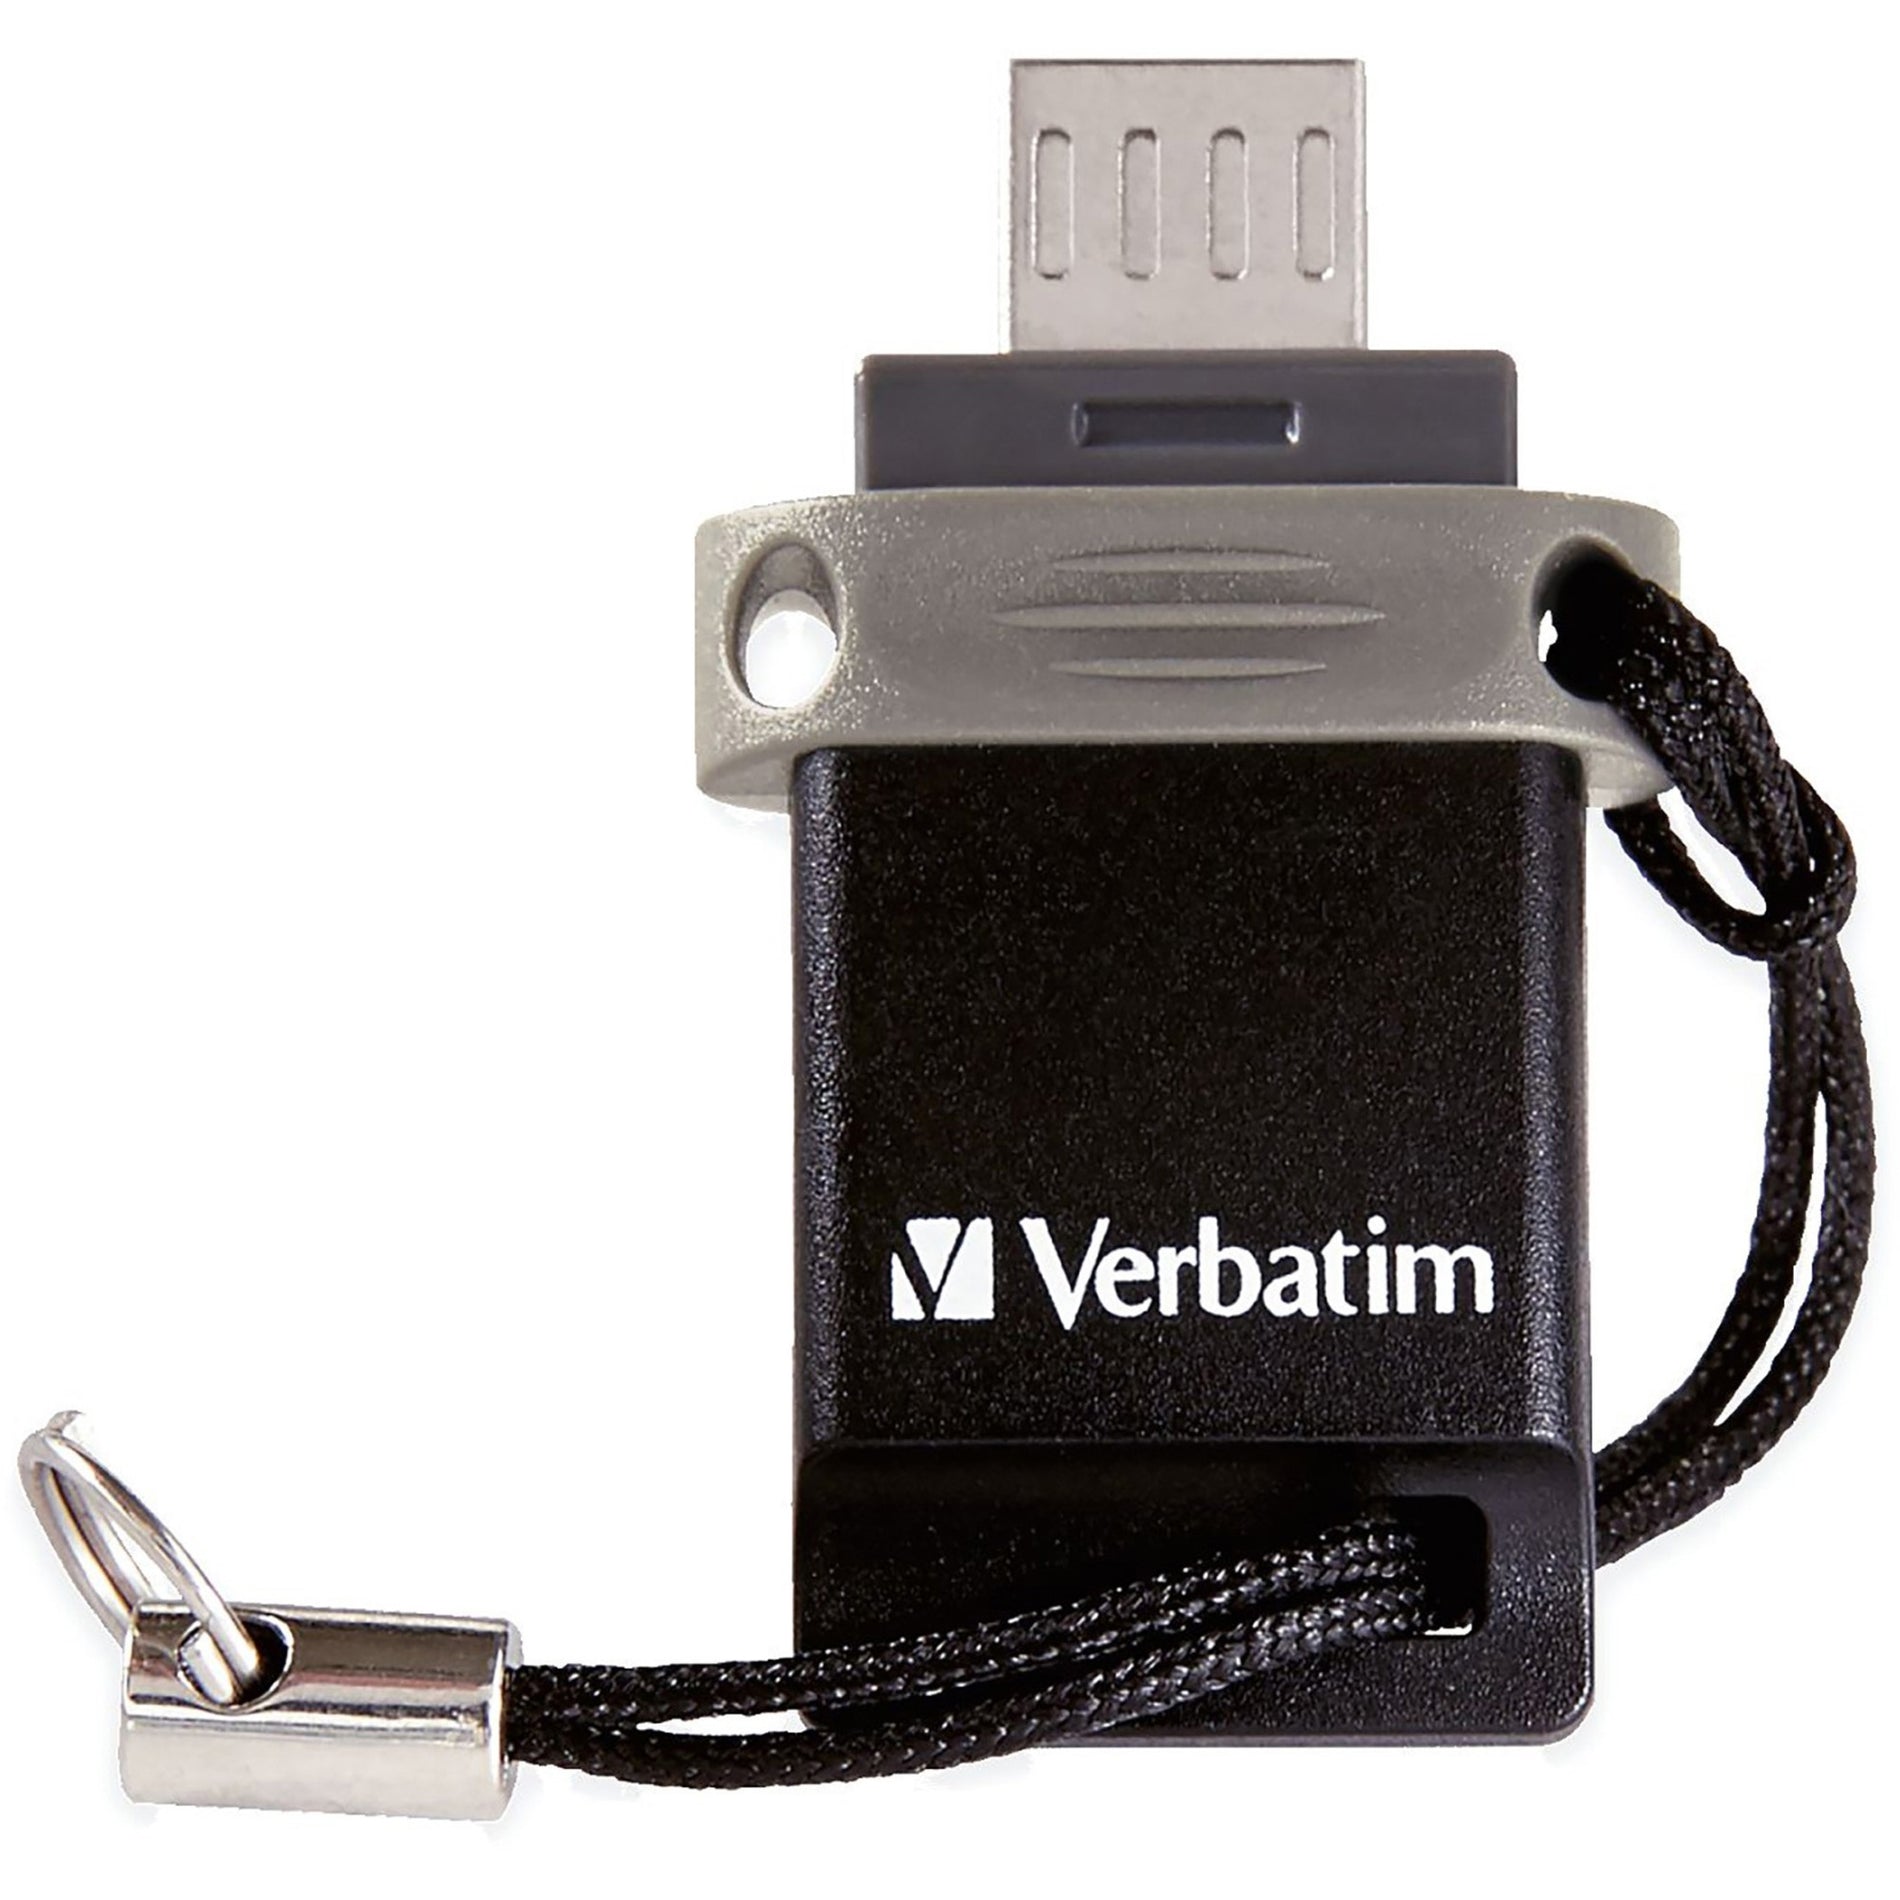 Verbatim 99140 Store 'n' Go Dual USB Flash Drive, 64GB, Black/Gray